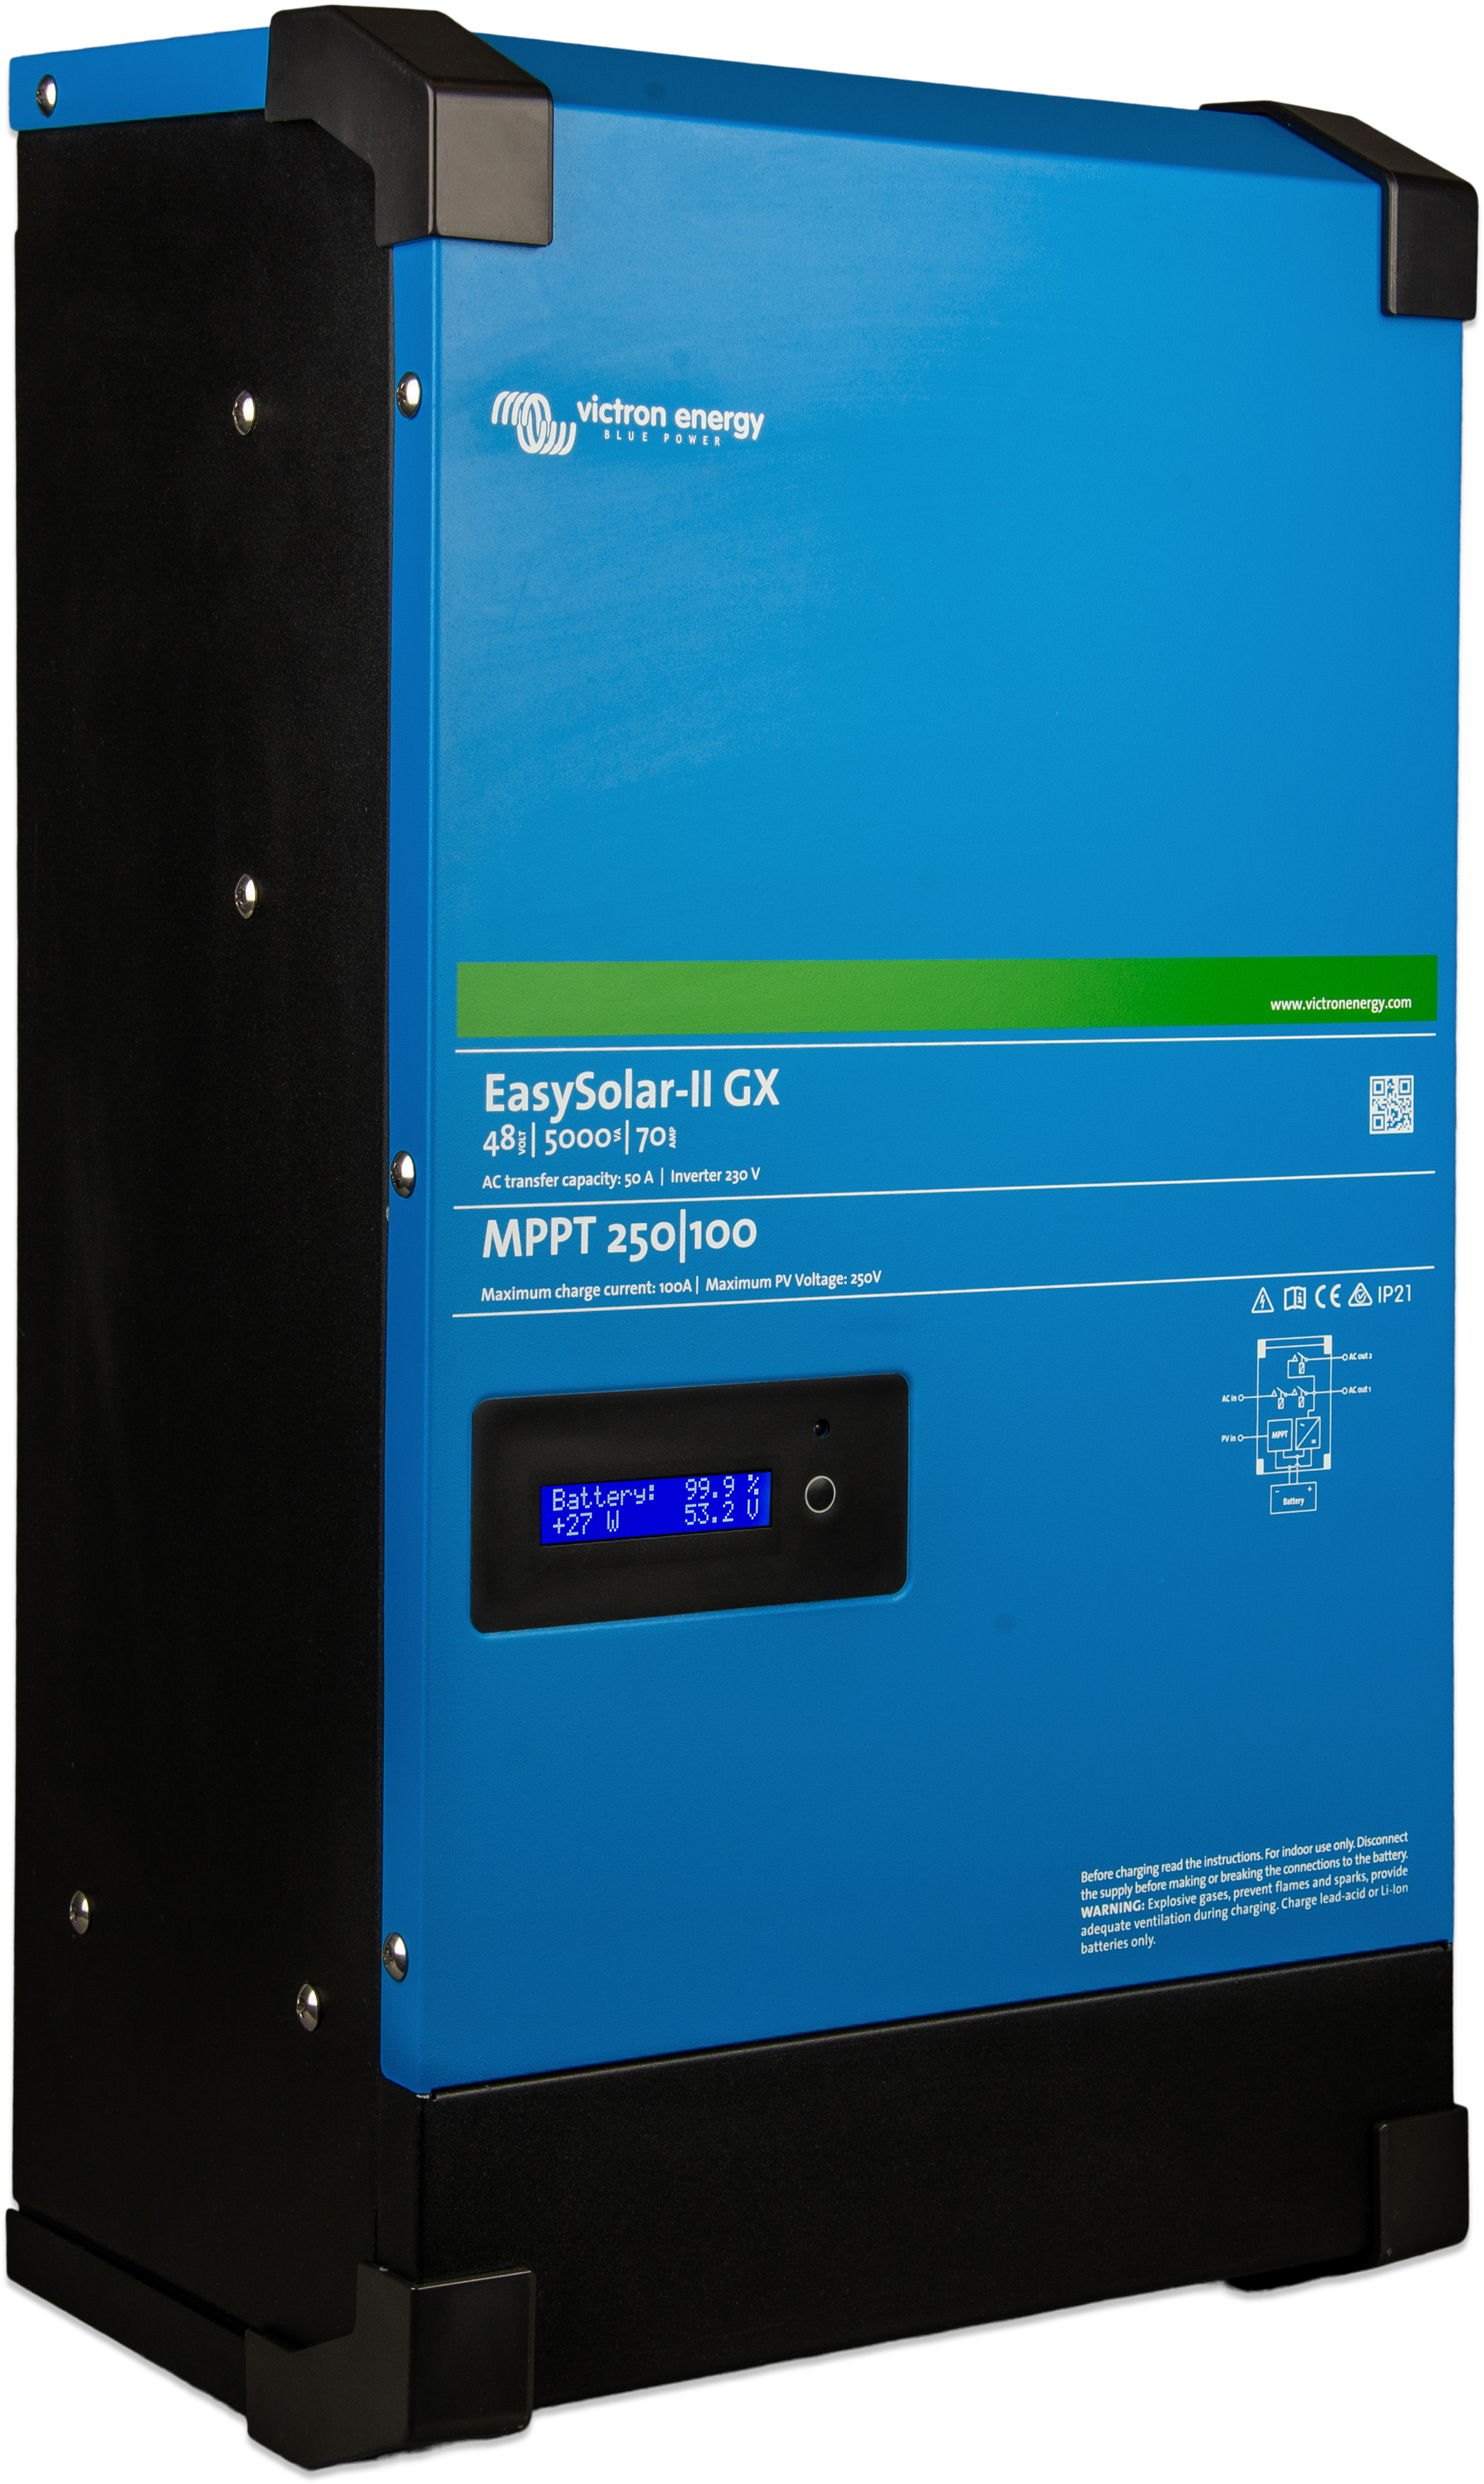 Инвертор гибридный Victron Energy EasySolar-II 48/5000/70-50 MPPT 250/100 GX цена 135594.00 грн - фотография 2